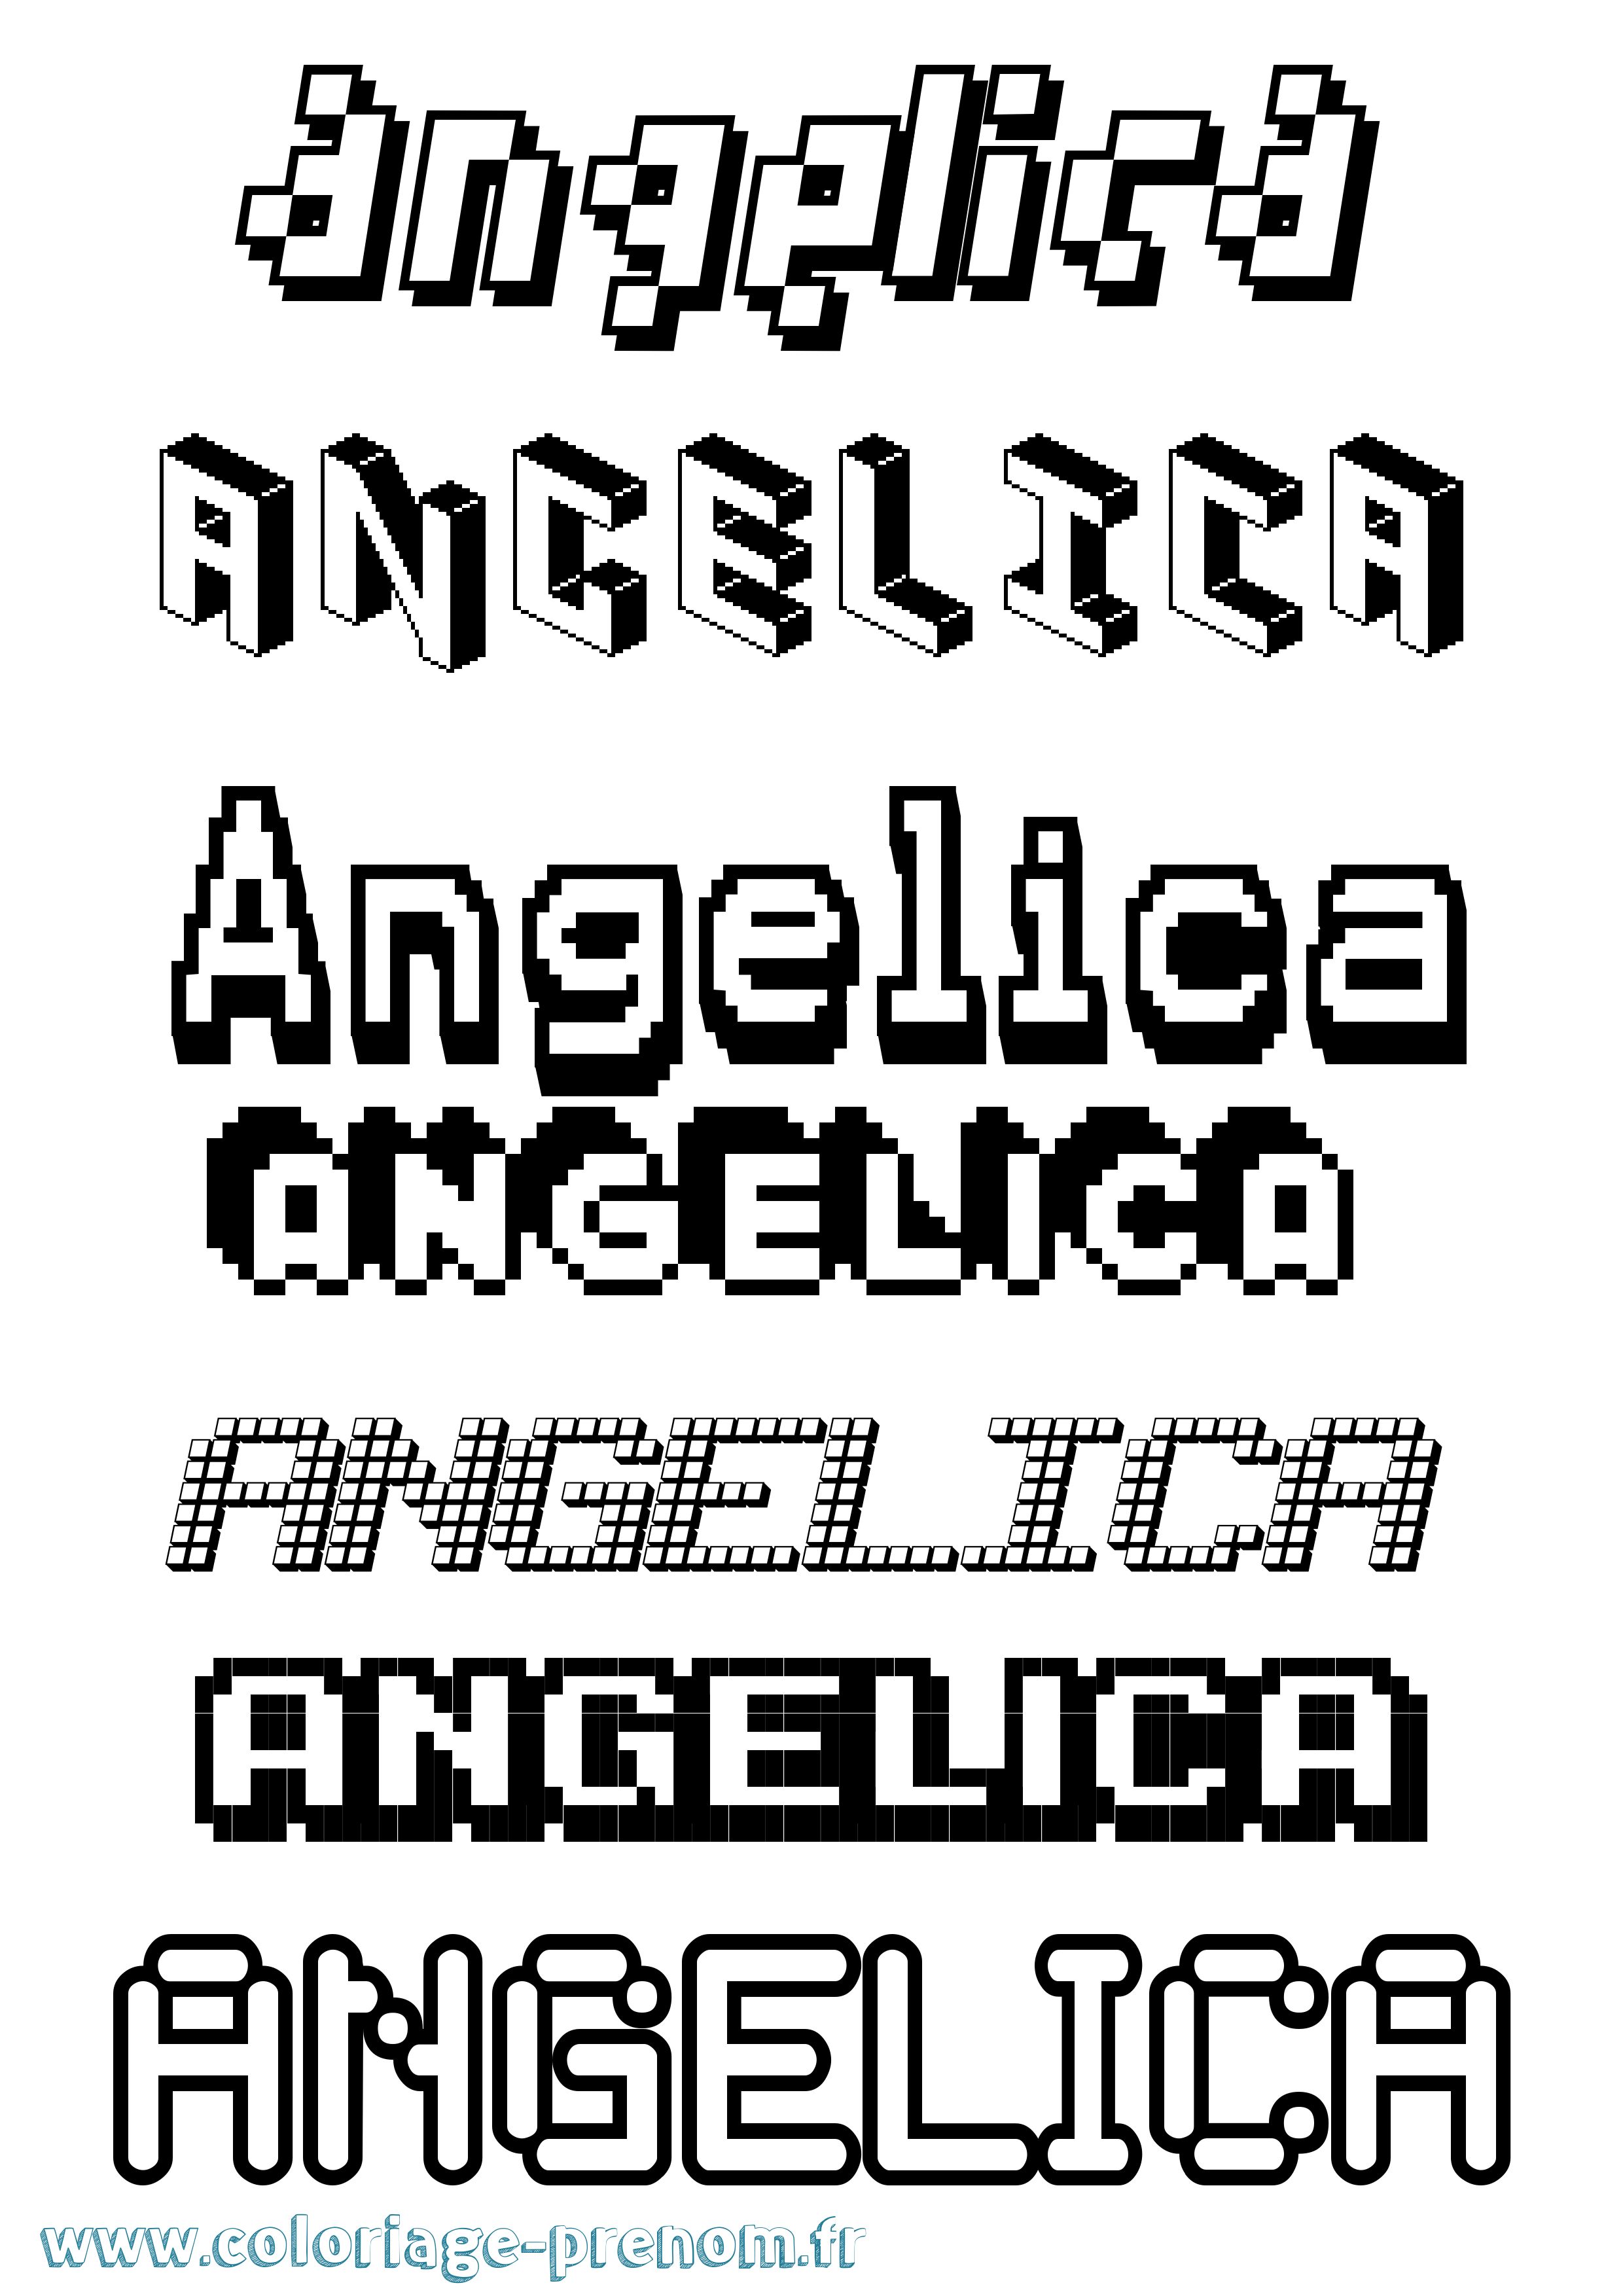 Coloriage prénom Angelica Pixel